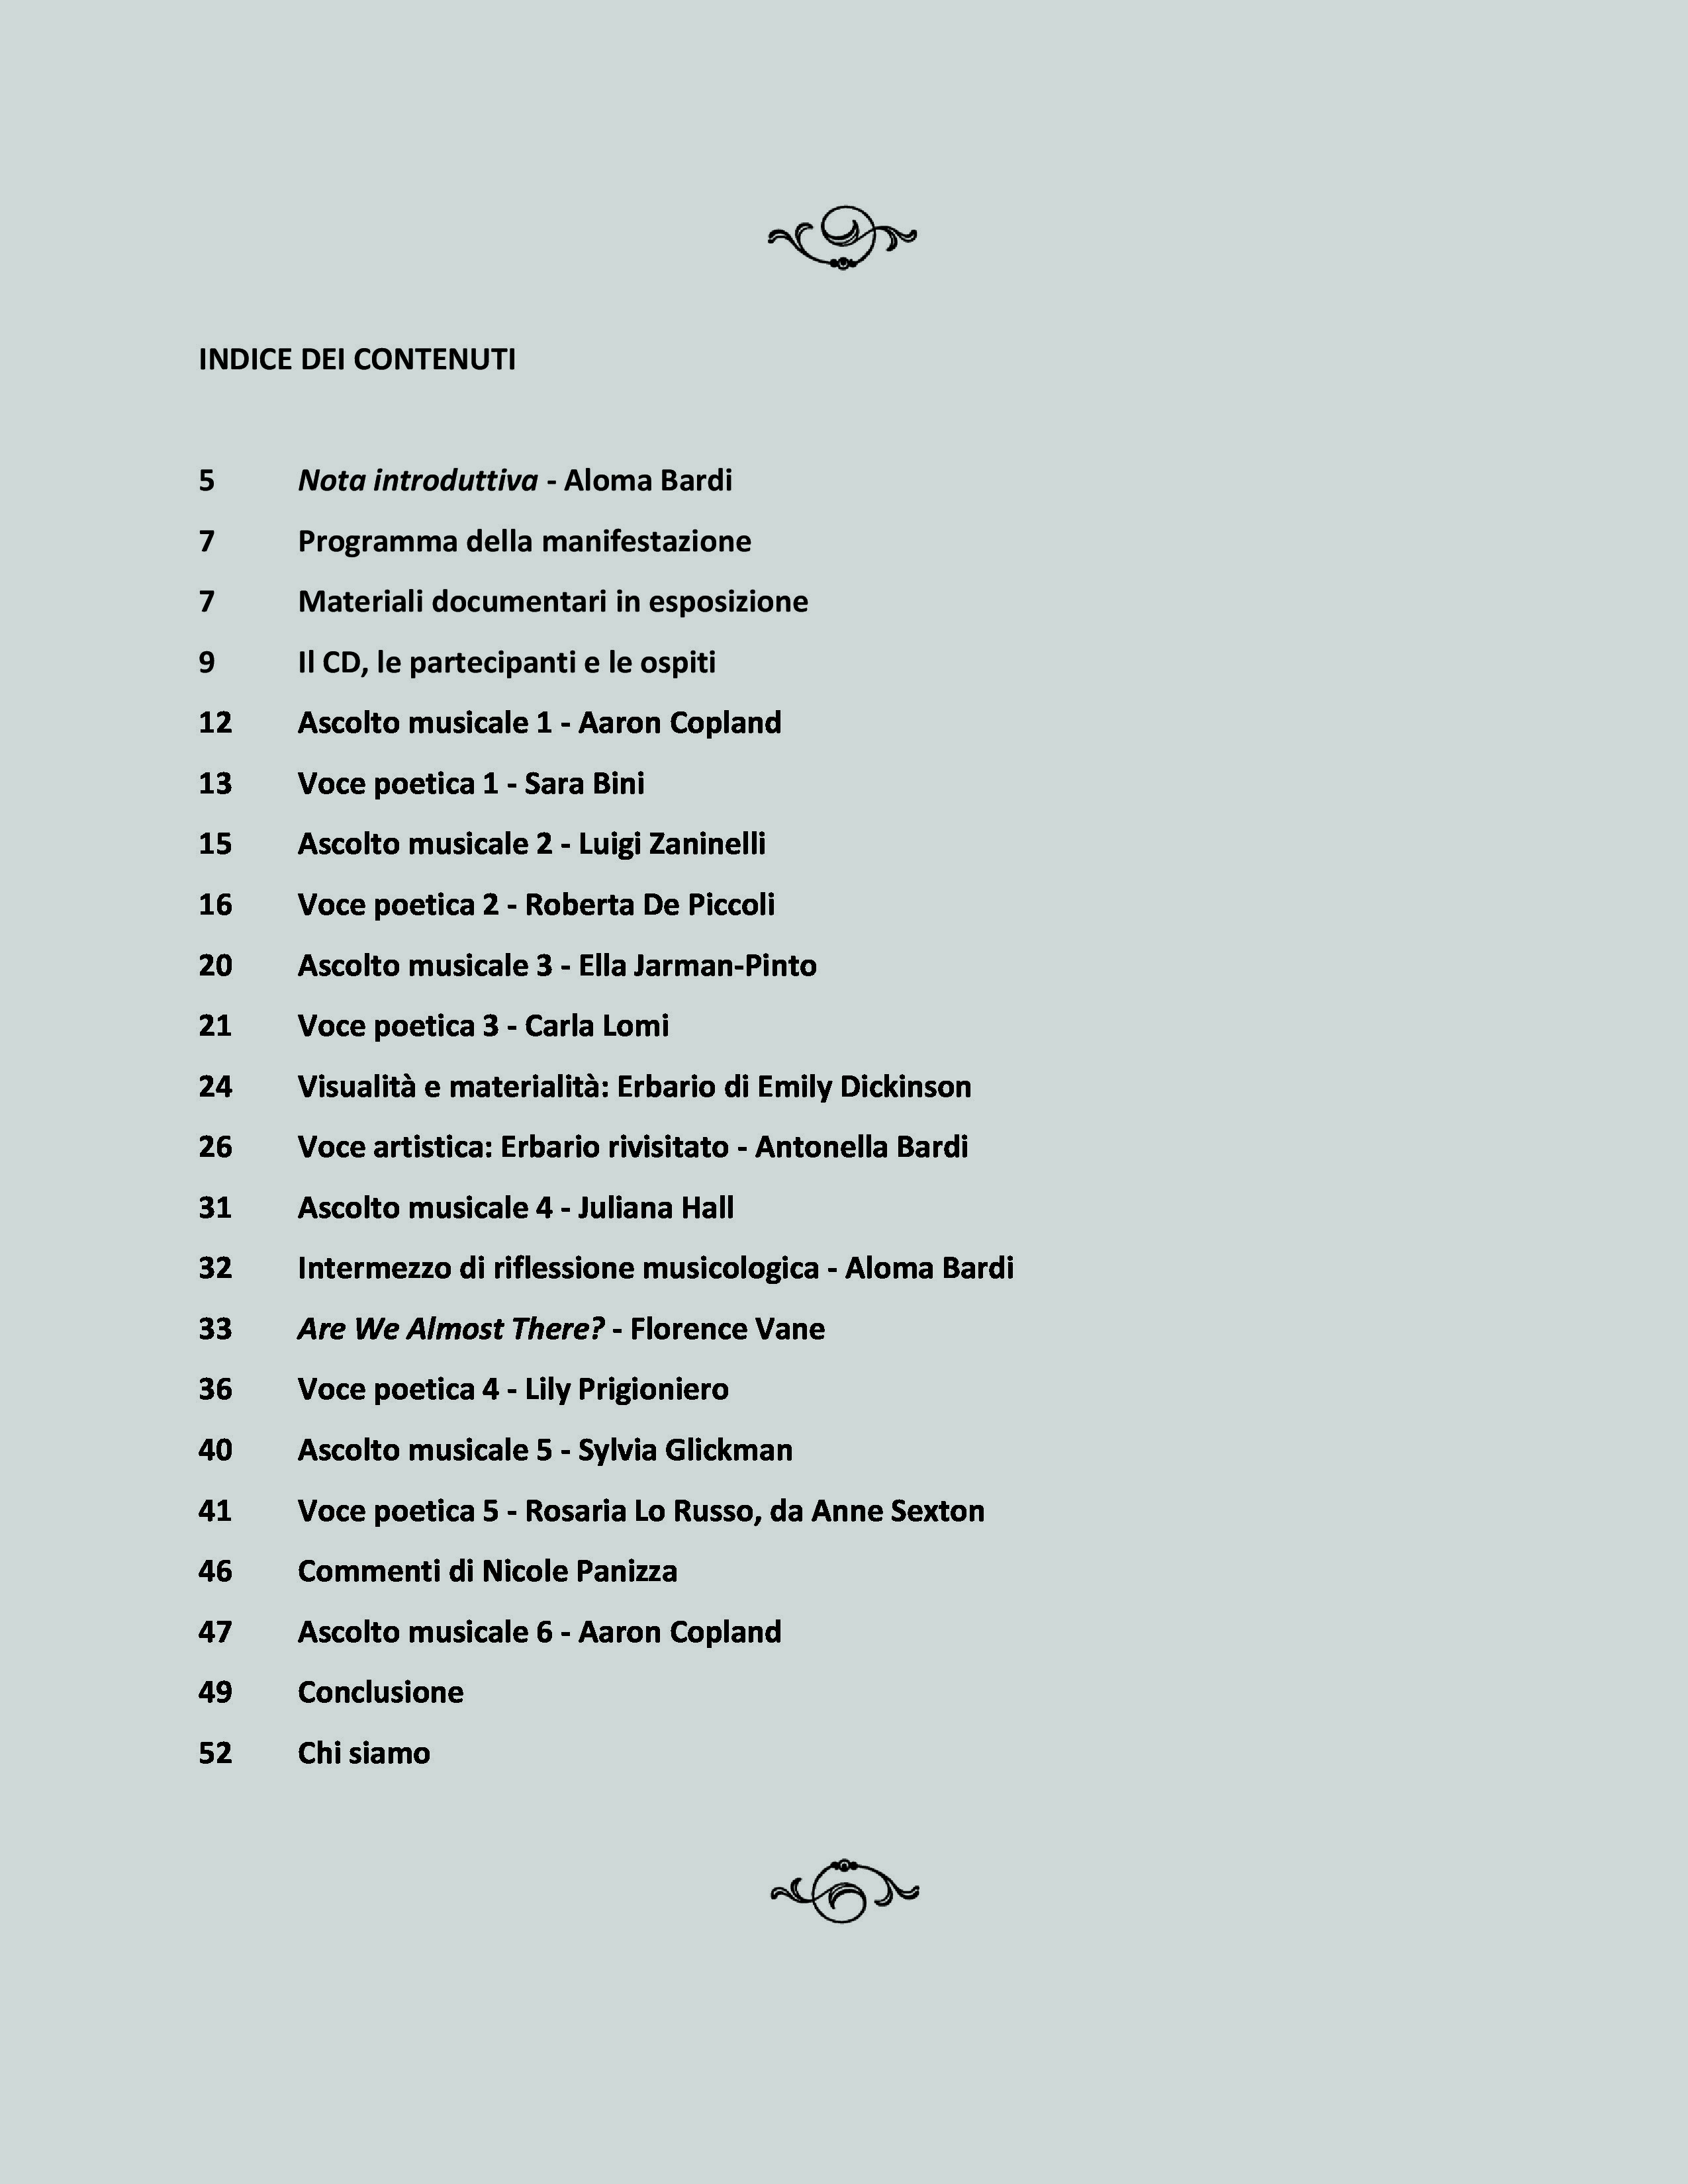 ICAMus Fenice Publication 05-17-2022 - Indice volume-page-0.jpg